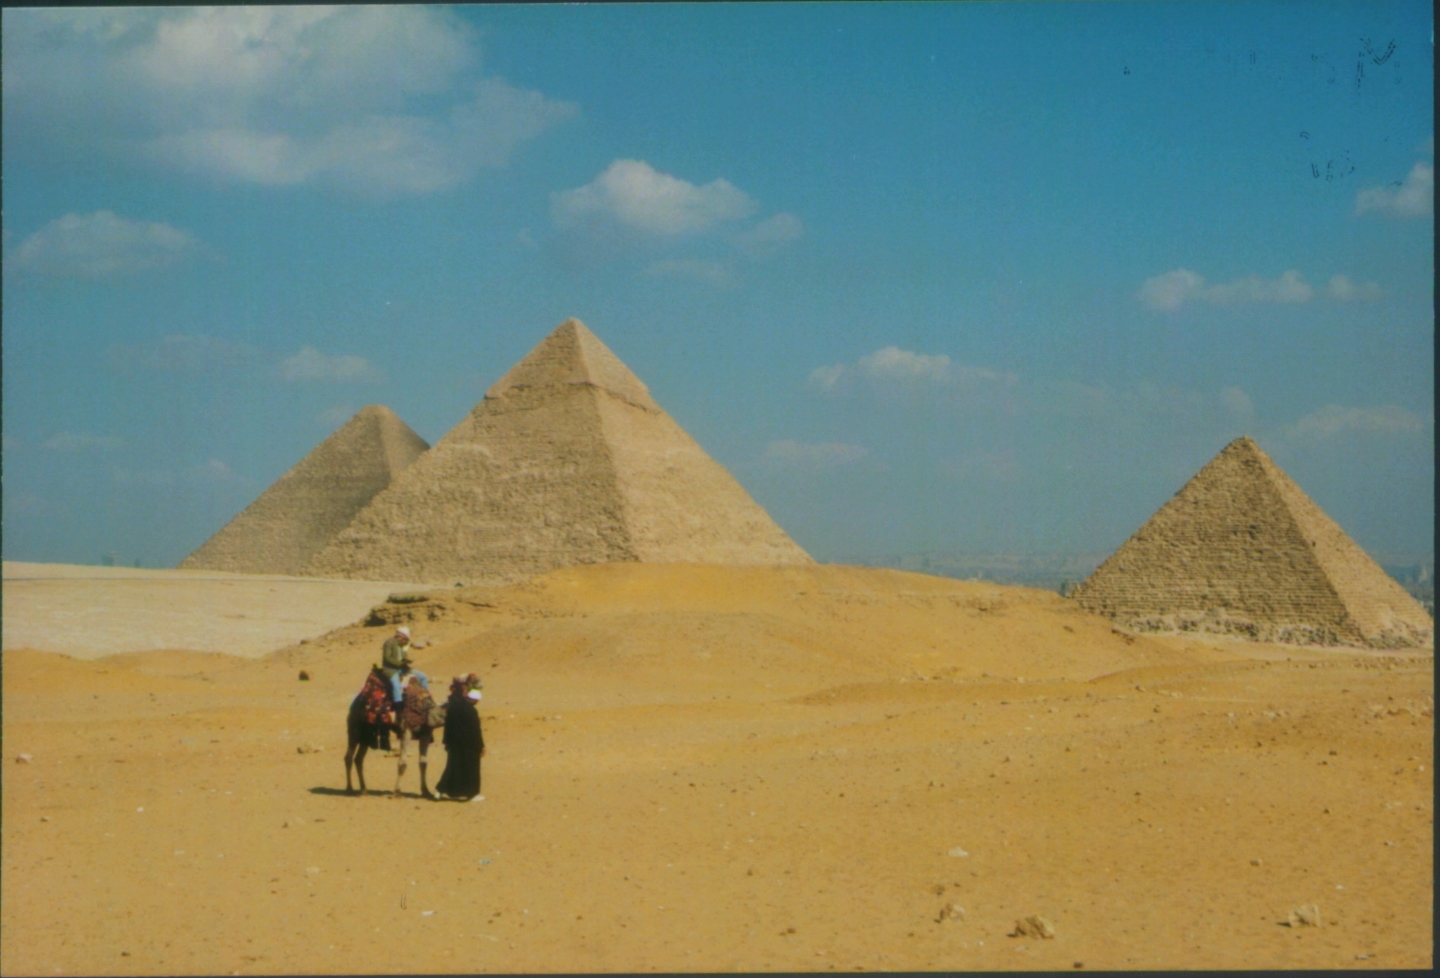 Pyramids of Egypt 1998